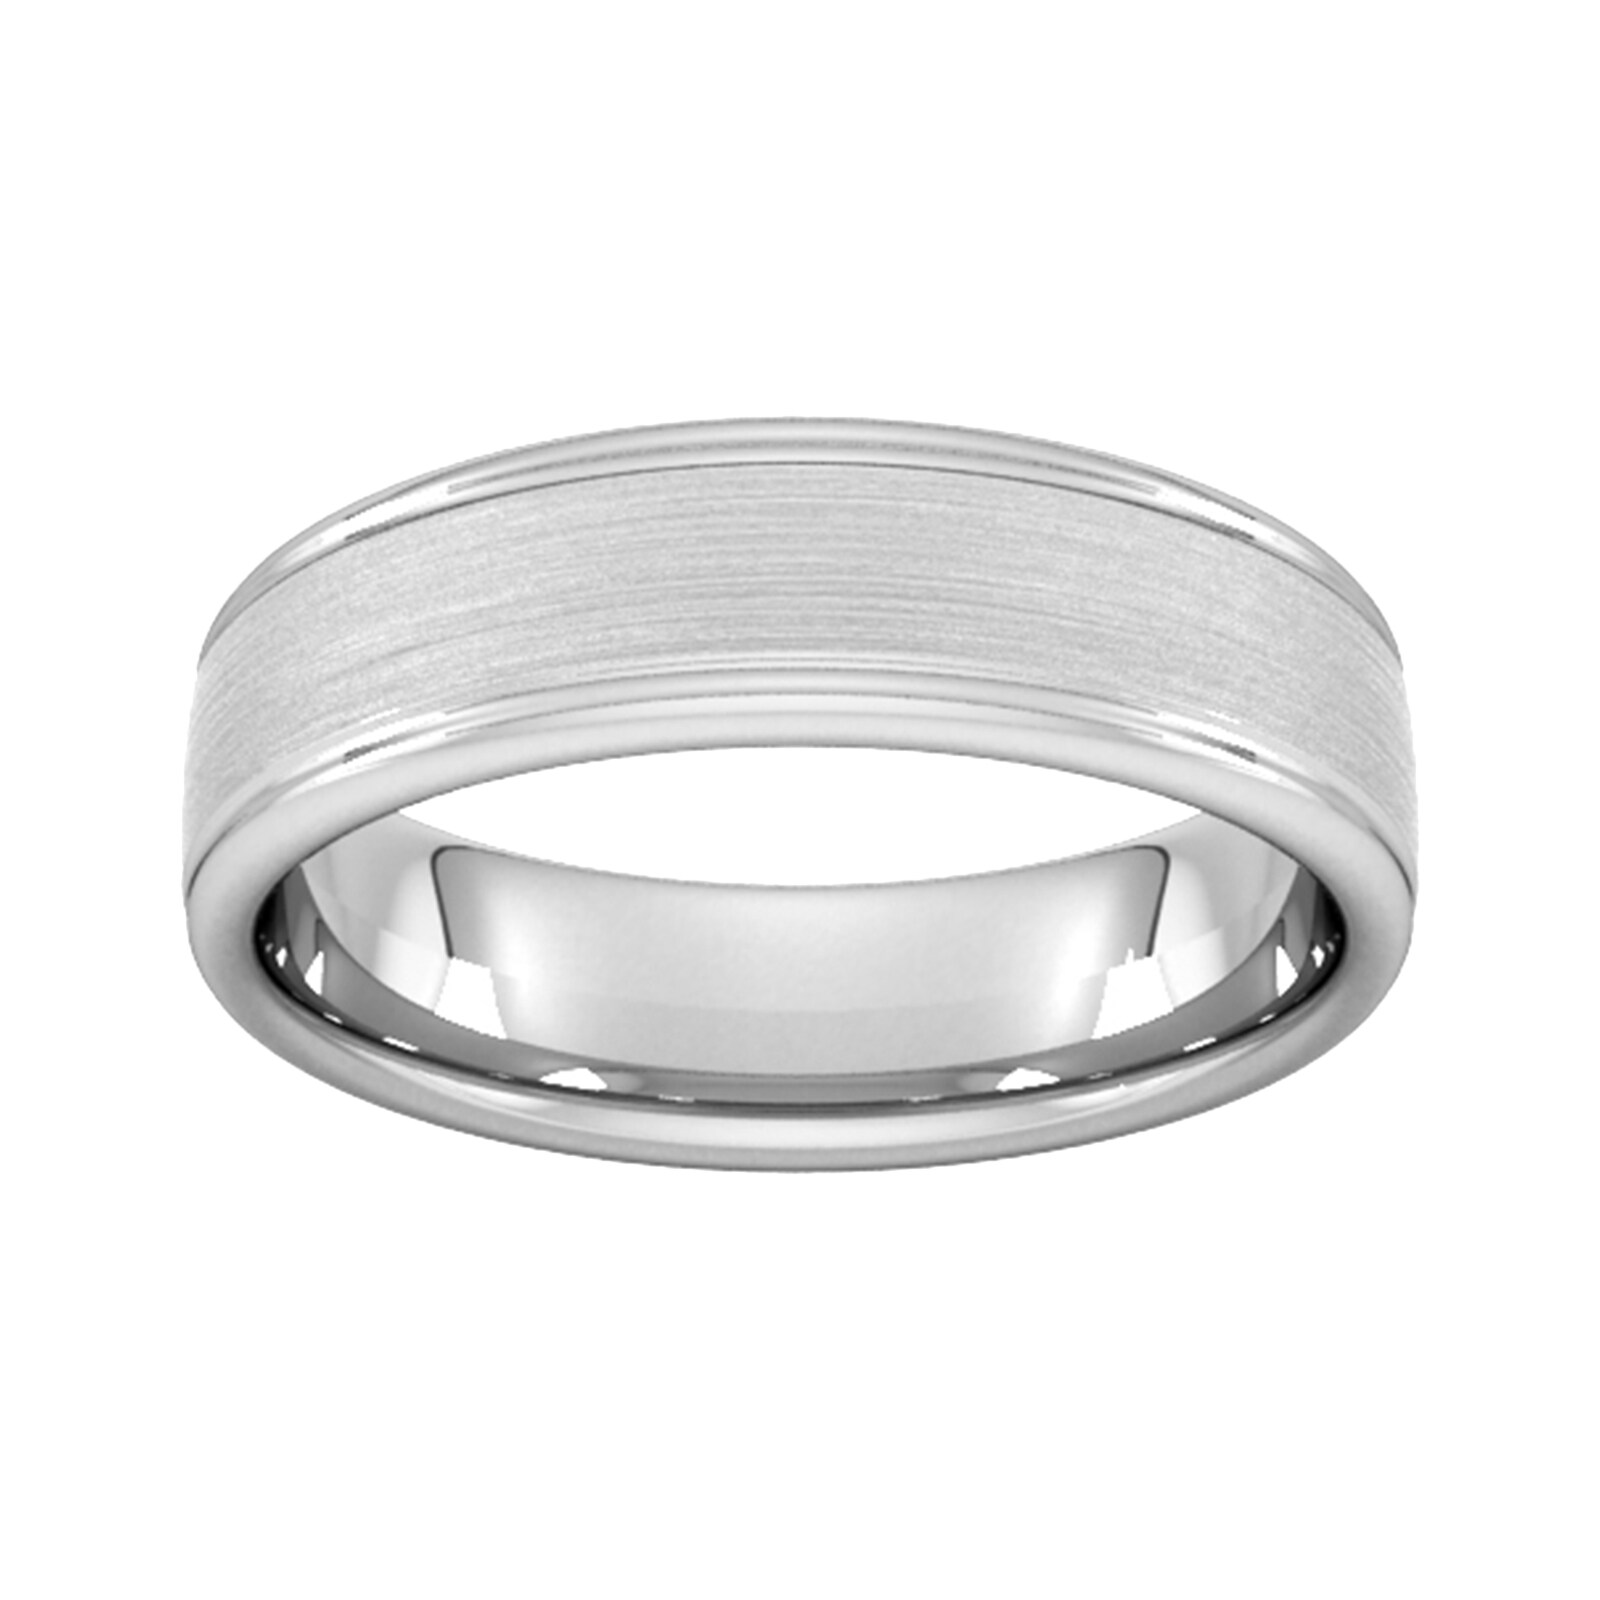 6mm Slight Court Standard Matt Centre With Grooves Wedding Ring In 950 Palladium - Ring Size K